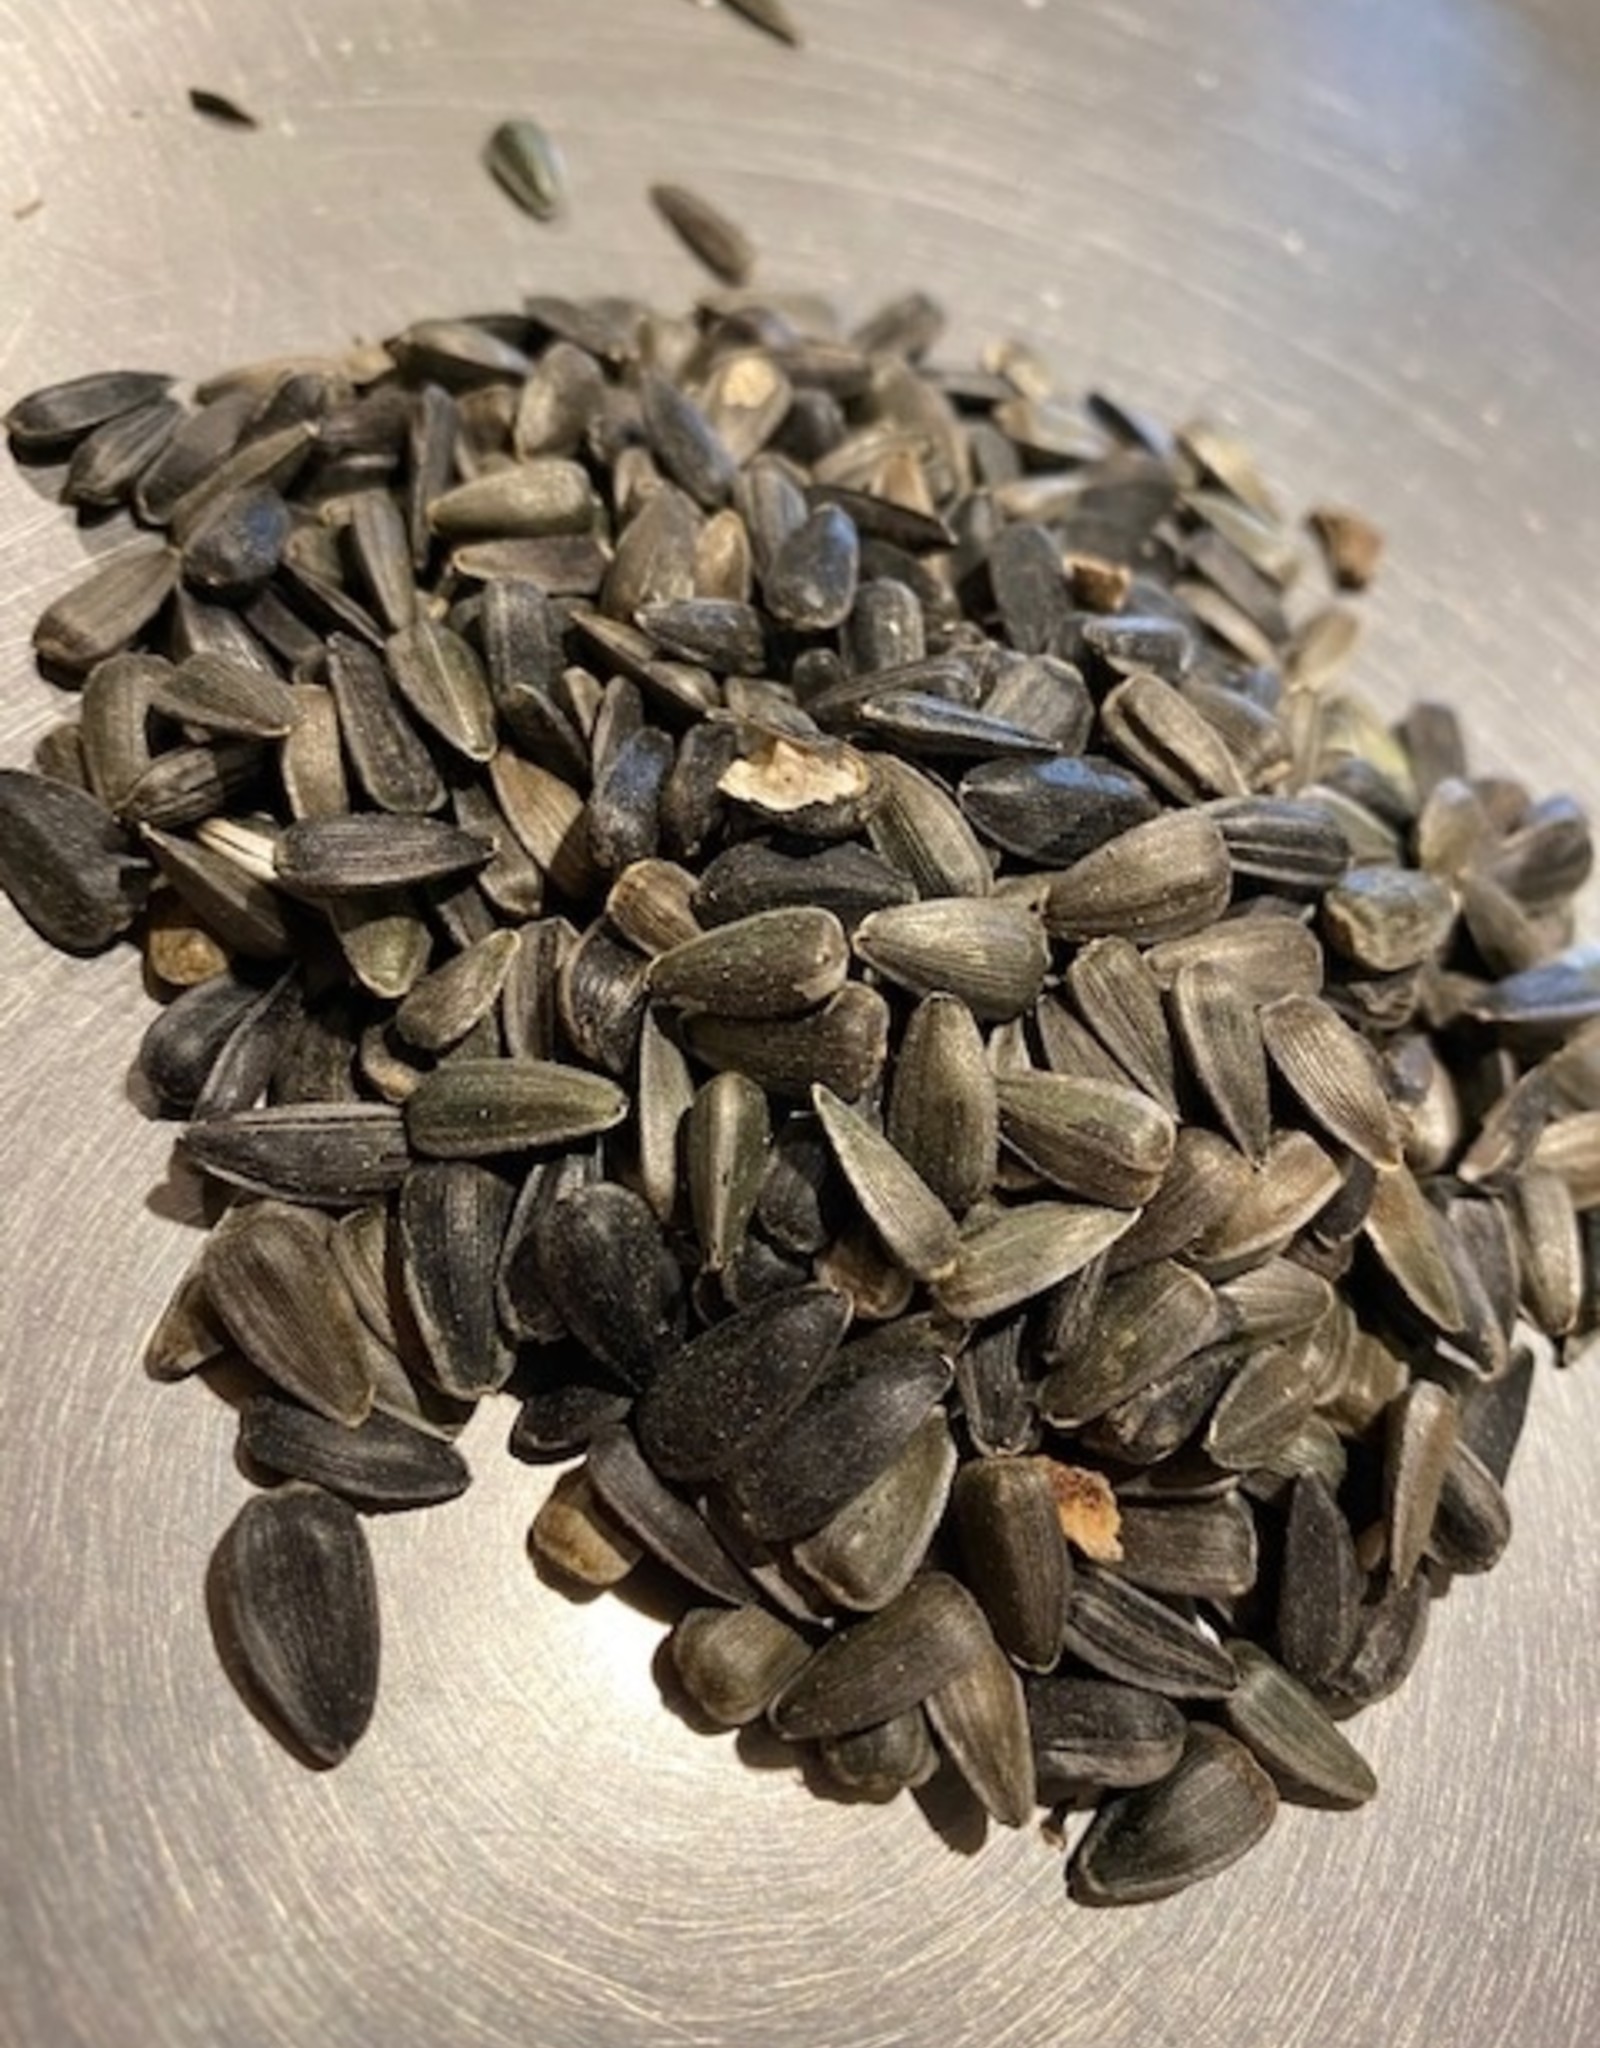 Mill Creek/Seed BLACK2.5 black oil 2.5lb bag